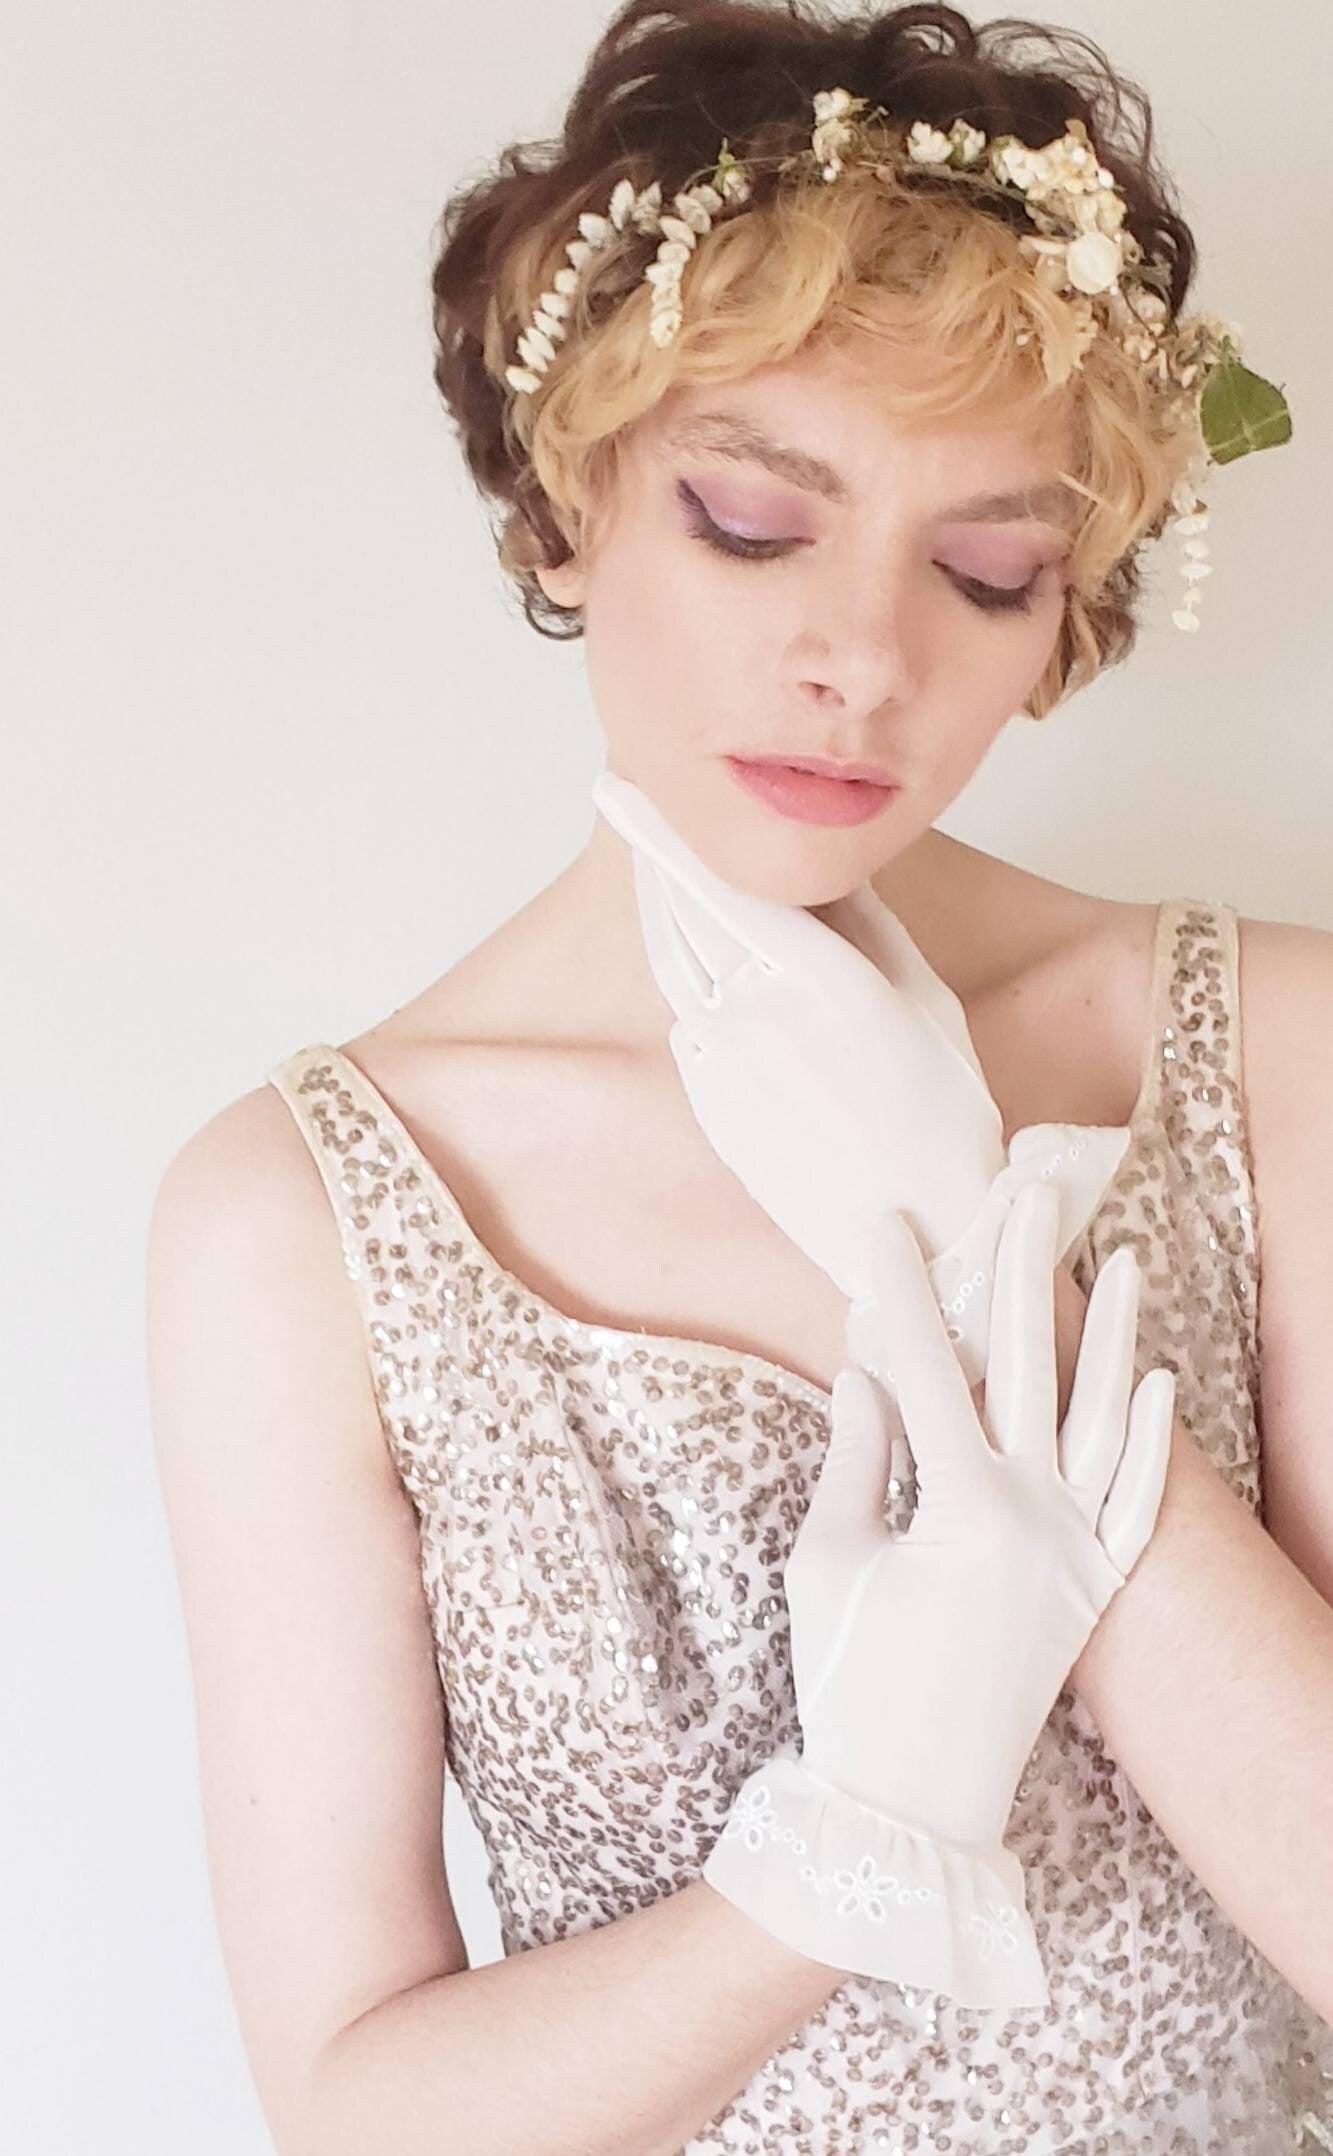 1950s White Nylon Cuffed Gloves / 50s Cocktail Gloves Eyelet Lace Ruffle Wedding Bridal / Feminine Frilly / Norma